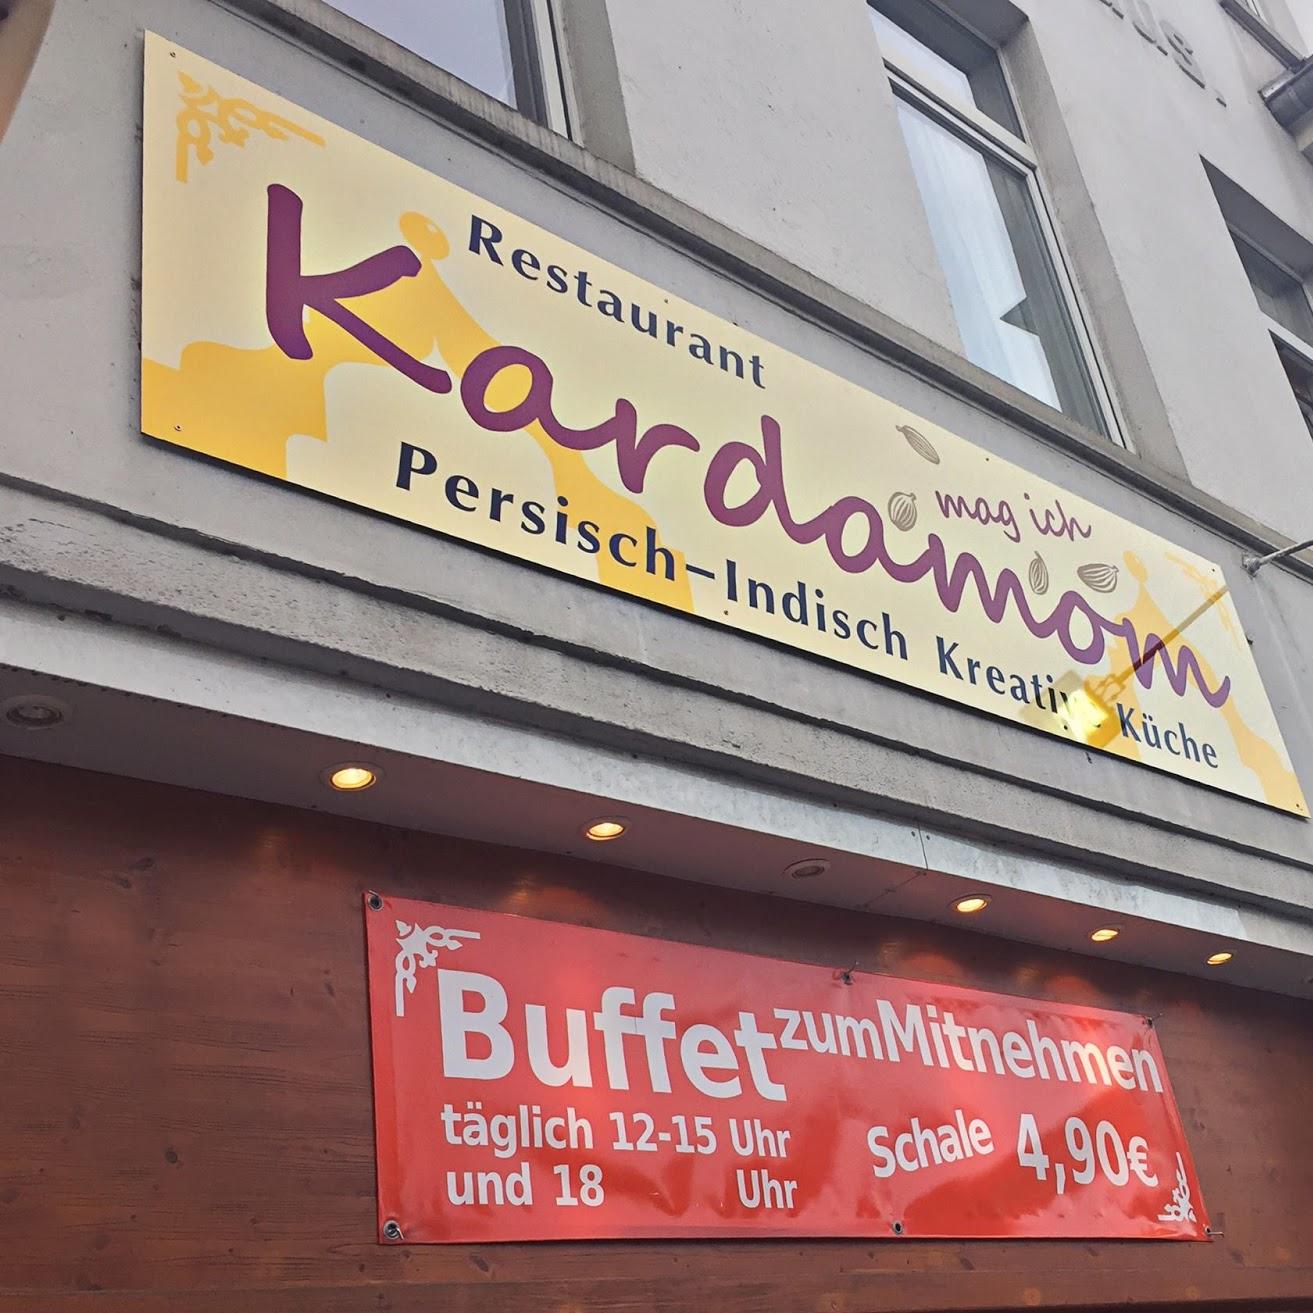 Restaurant "Restaurant Kardamom" in  Oldenburg